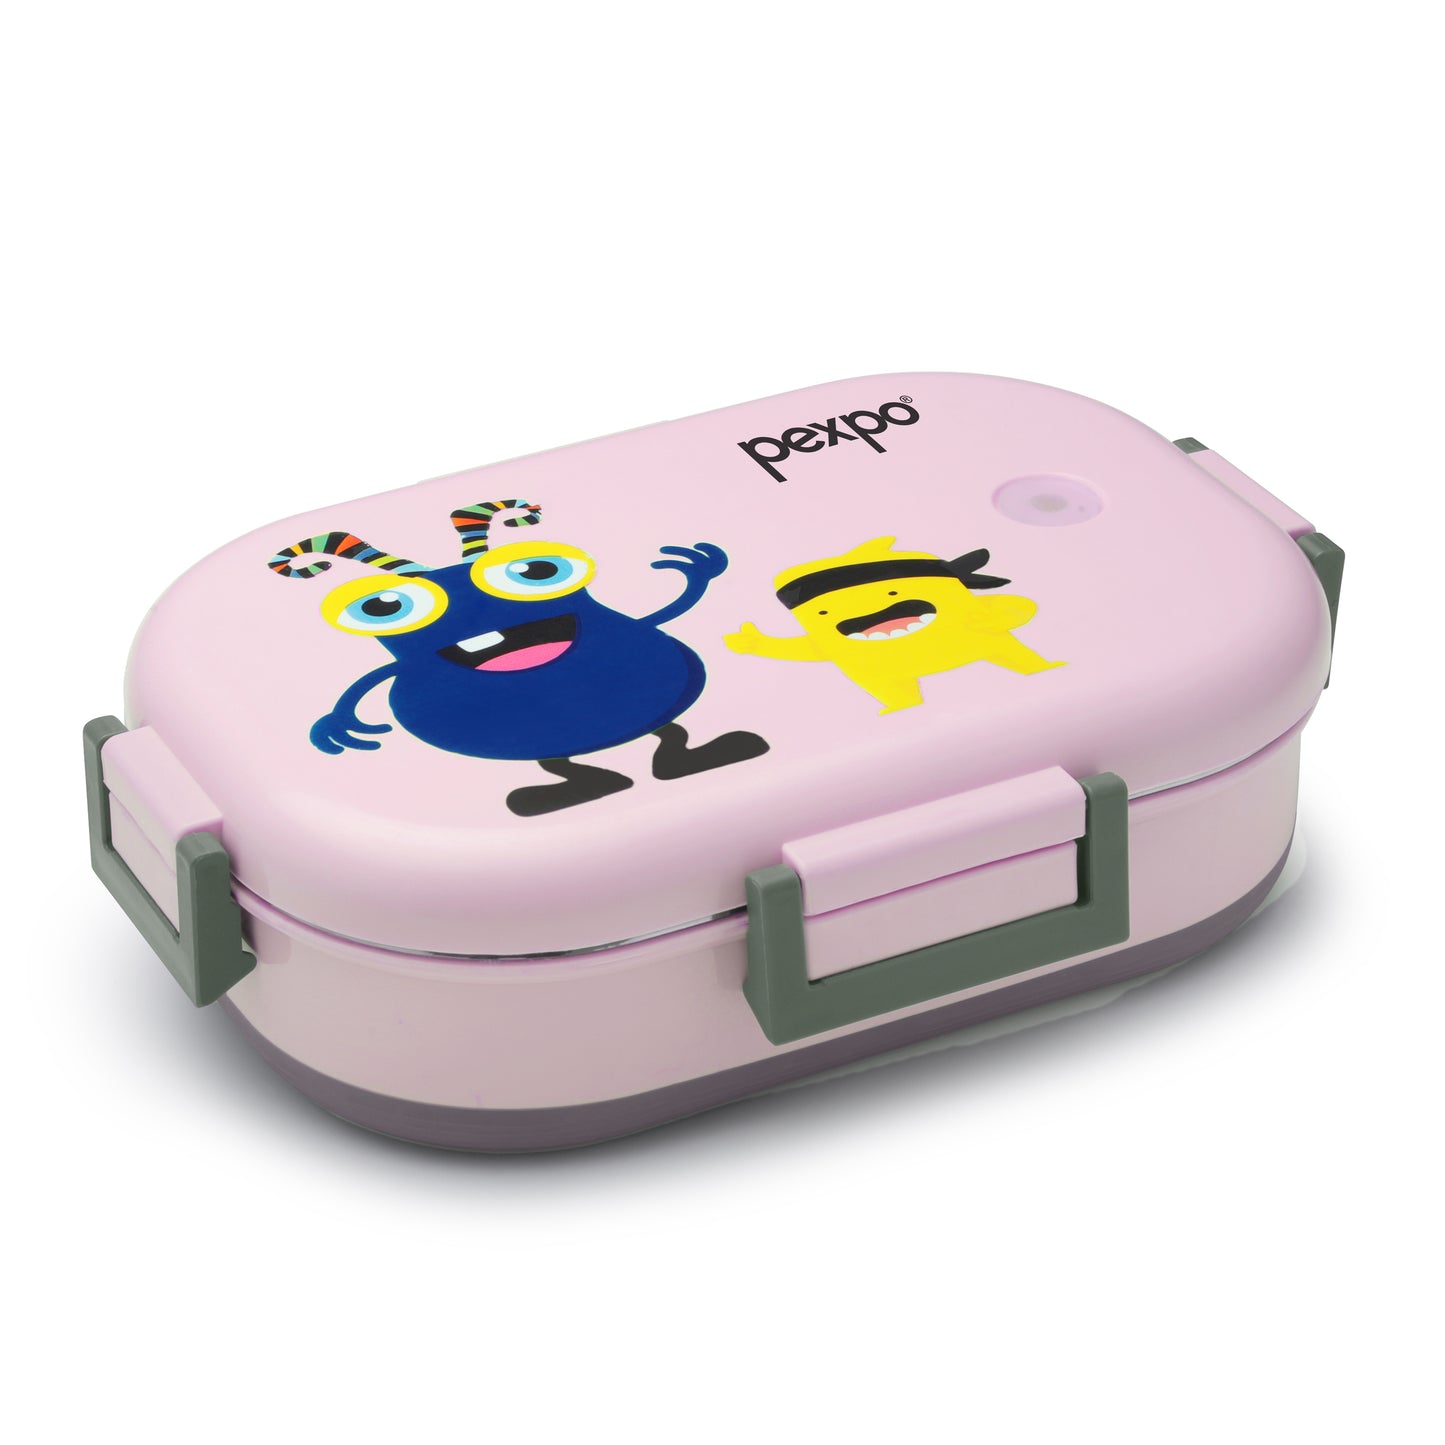 Pexpo Tango  - Stainless Steel Kids Lunch Box (Blue Monster Design)